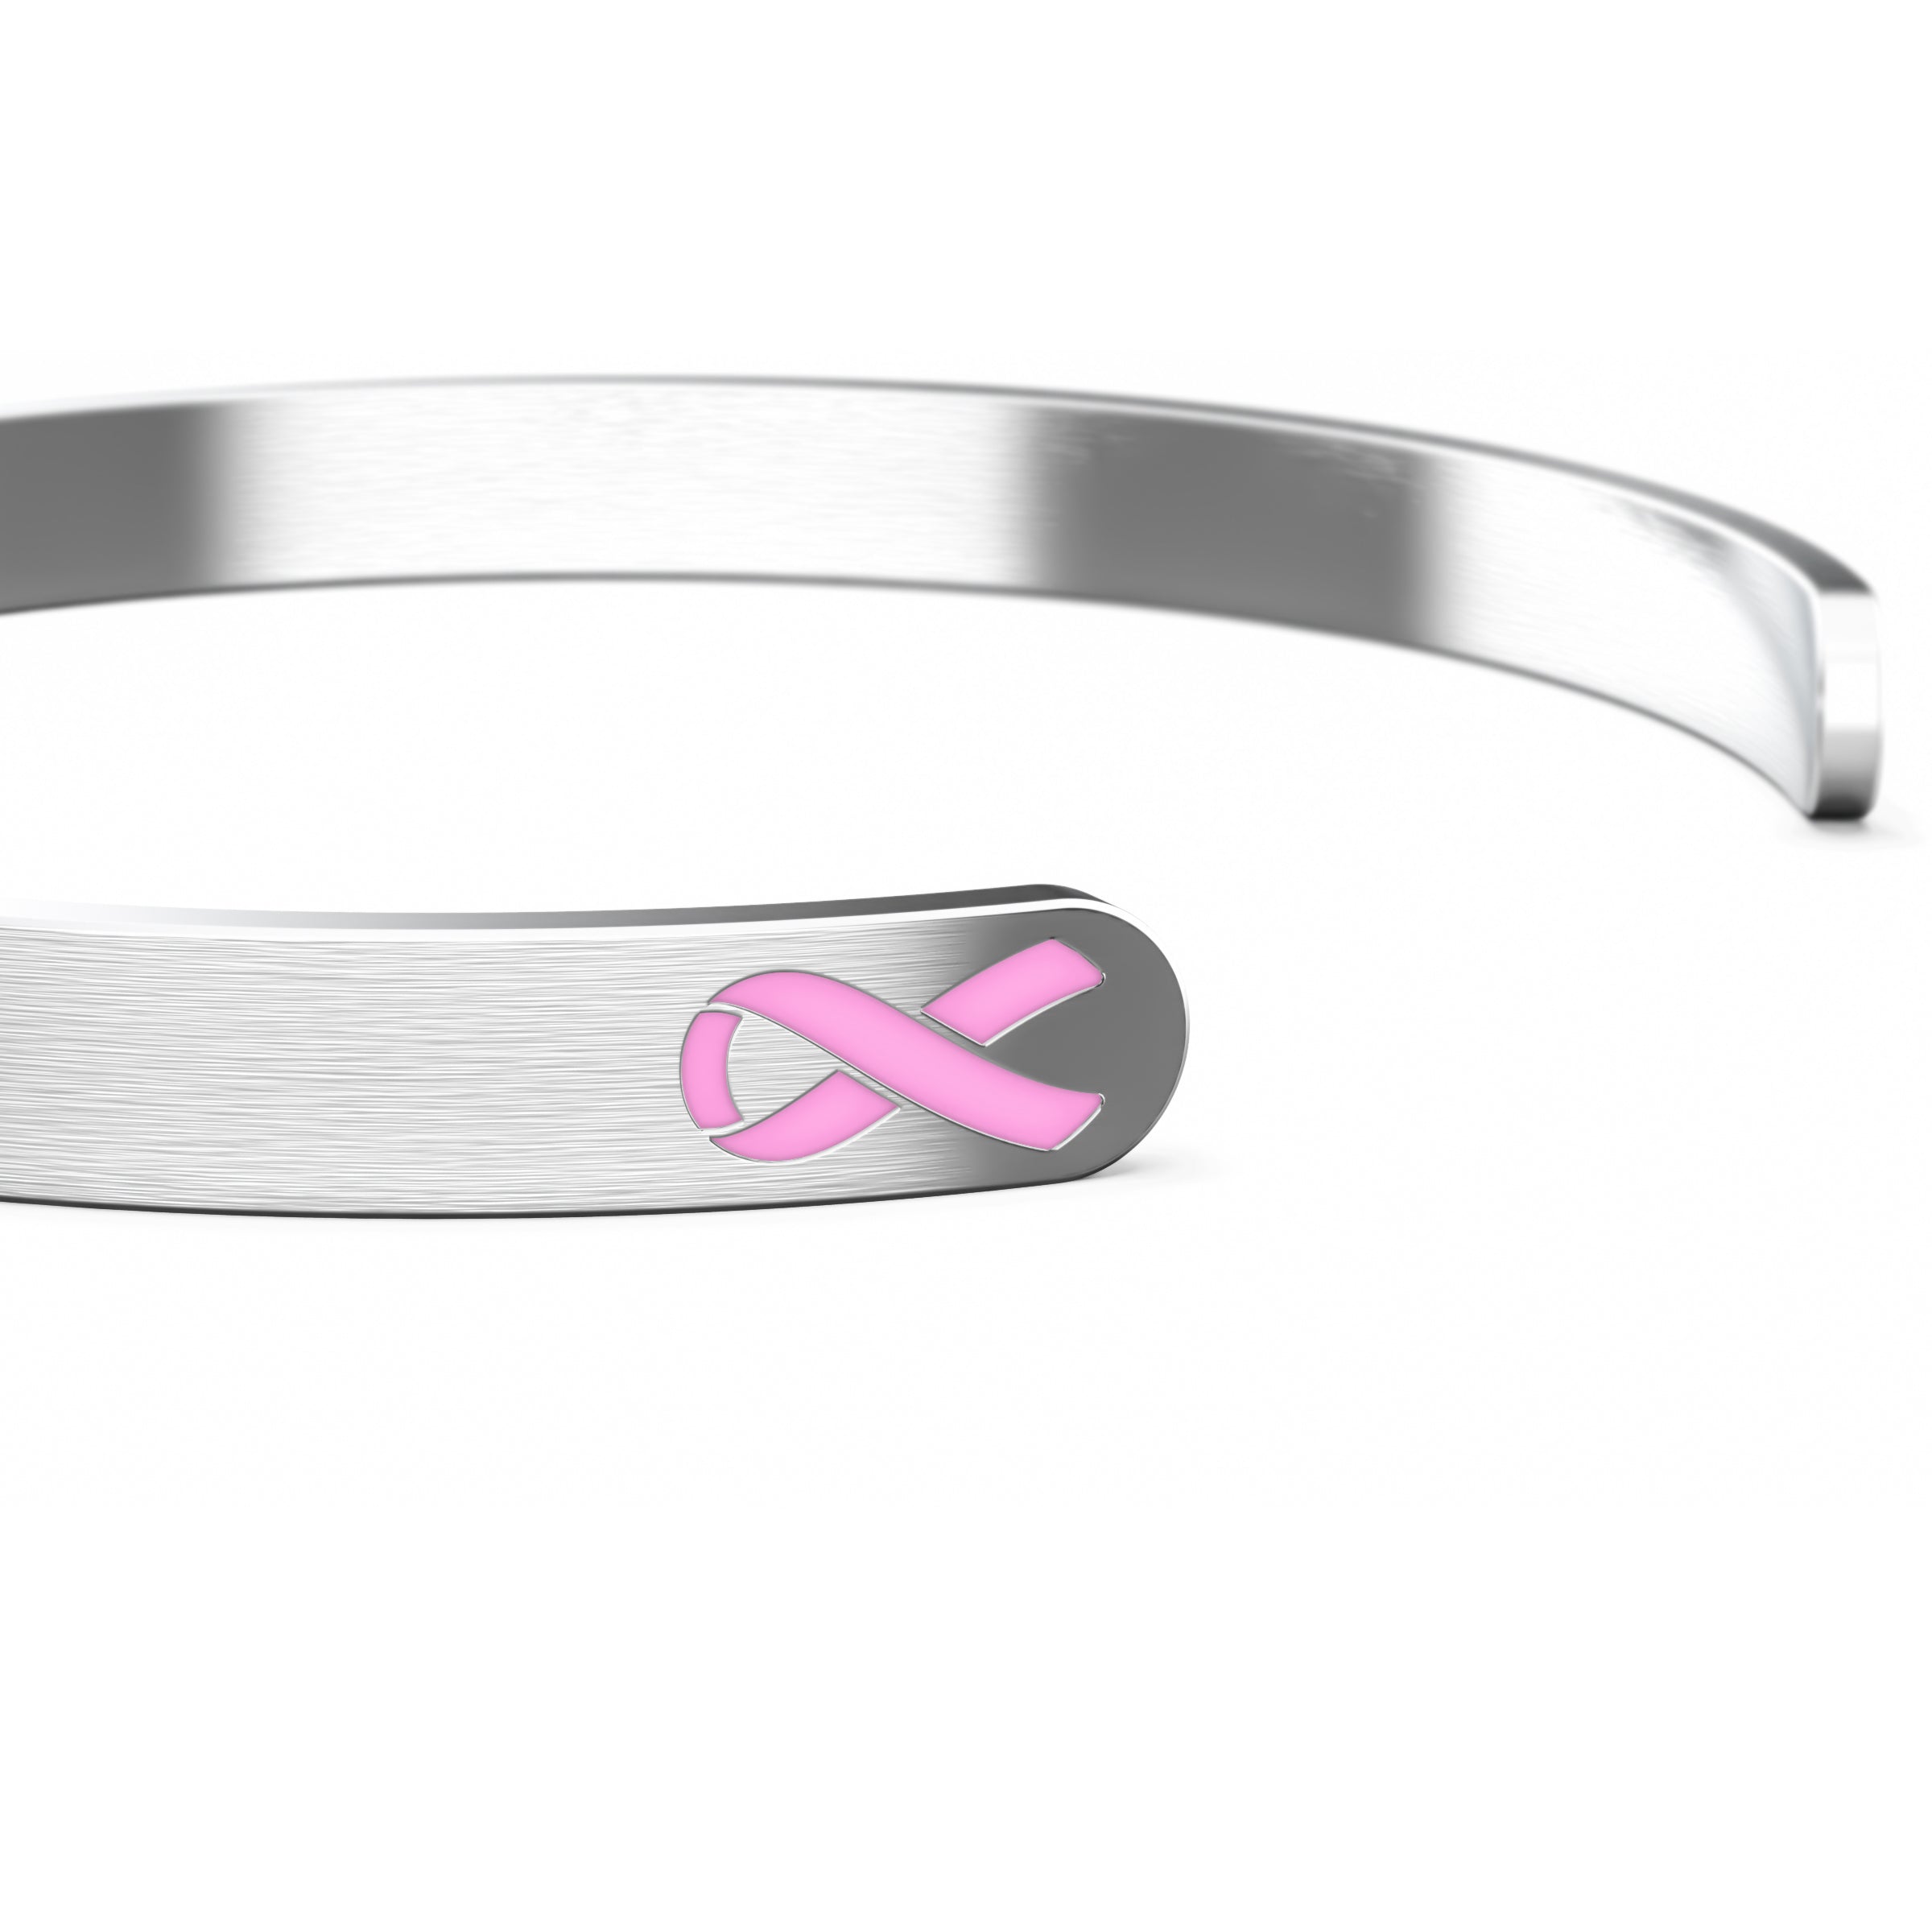 Custom Cancer Awareness Bracelets  Cancer Wristband Colors  Reminderband